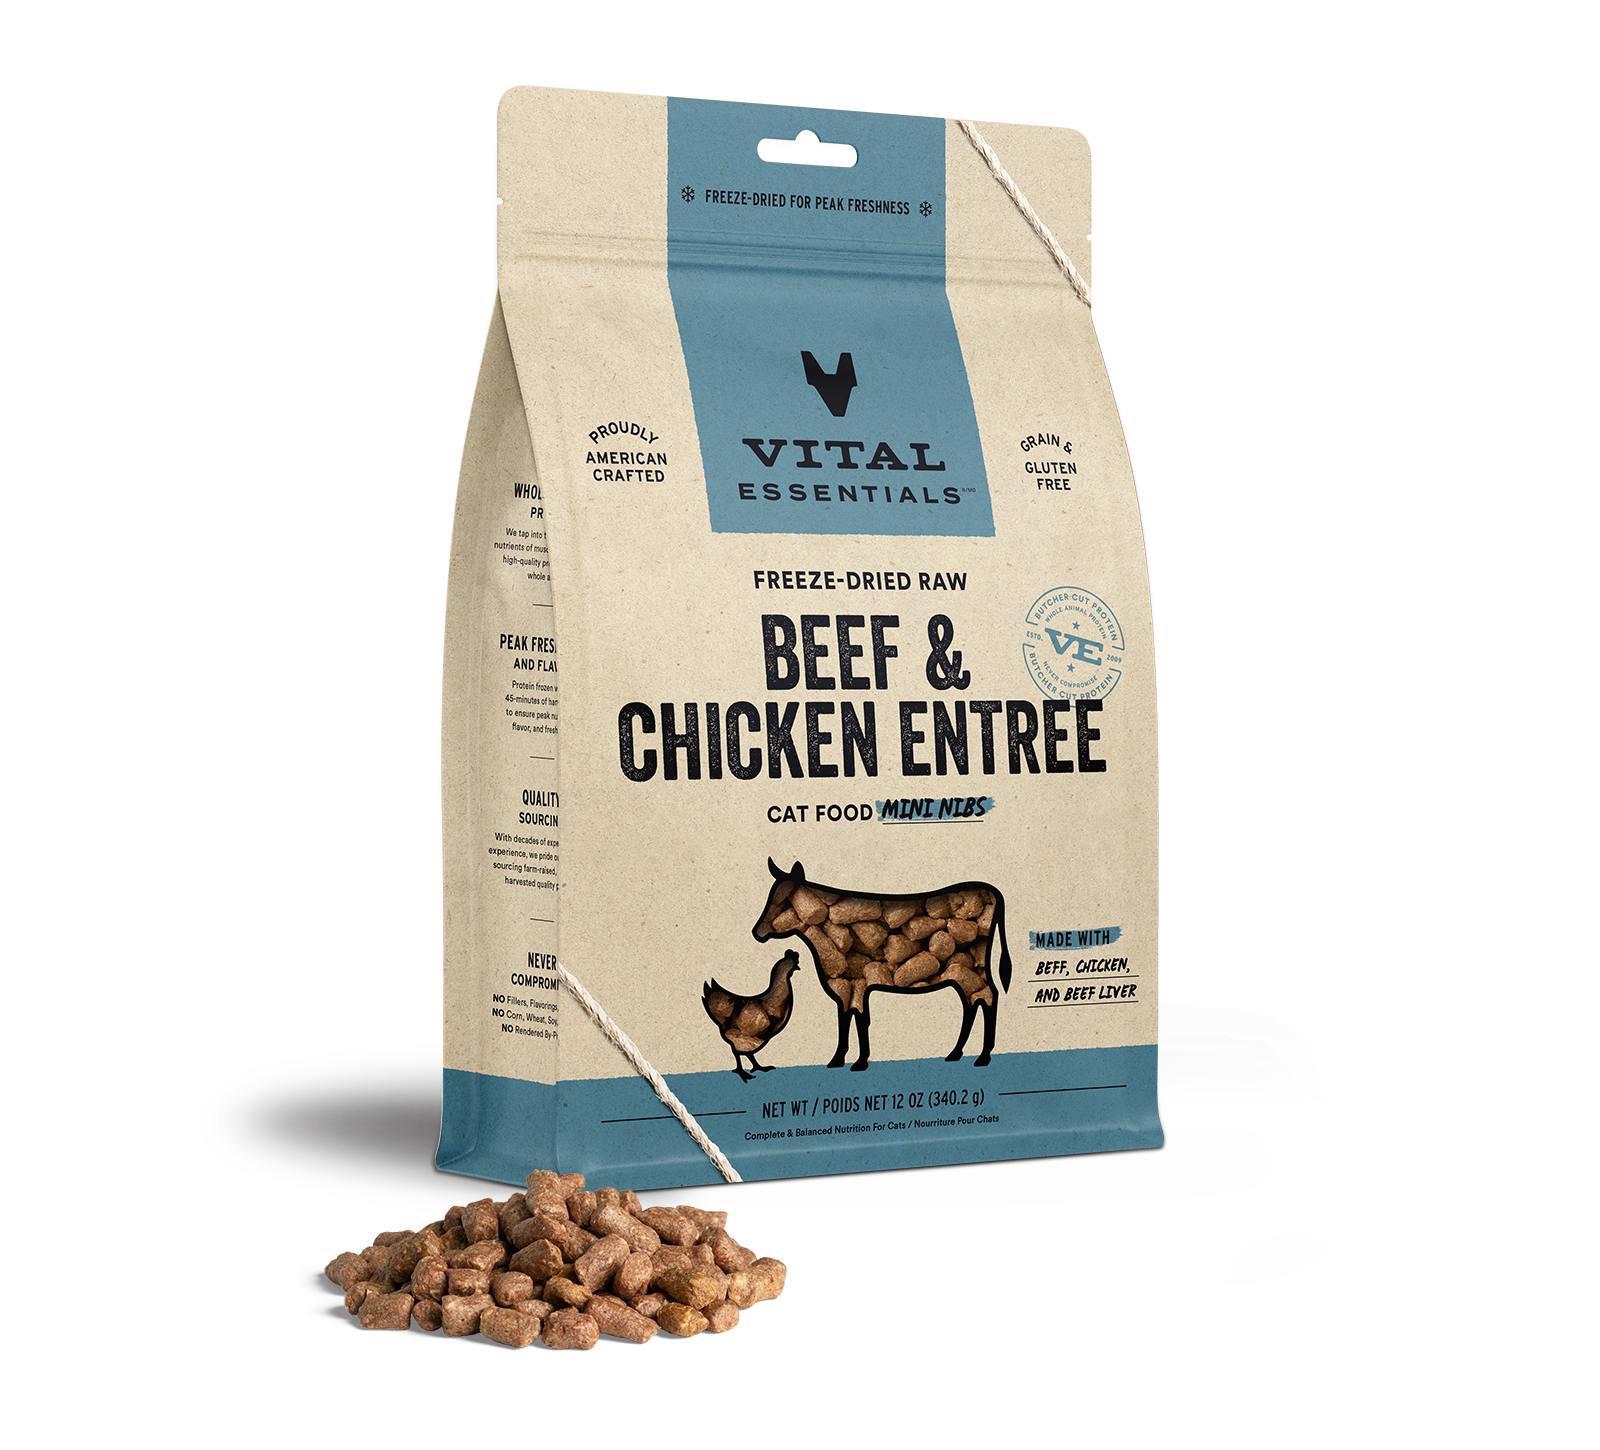 Vital Essentials Freeze-Dried Raw Beef & Chicken Entree Cat Food Mini Nibs, 12 oz - Healing/First Aid